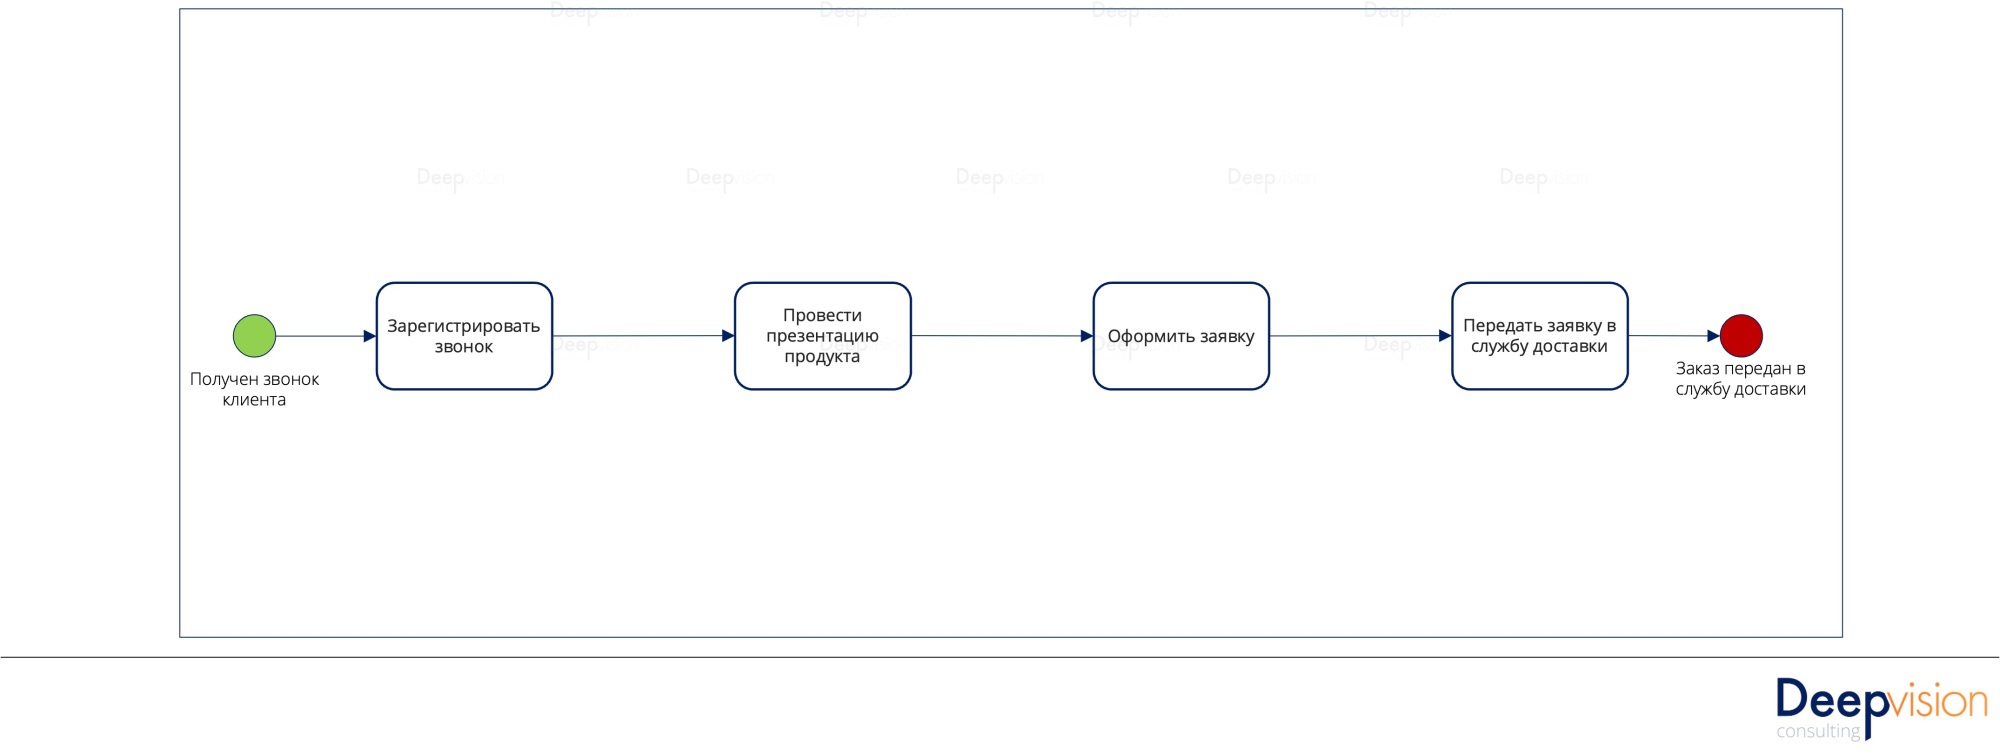 Схема бизнес процесса для нетерпеливых 2.jpg